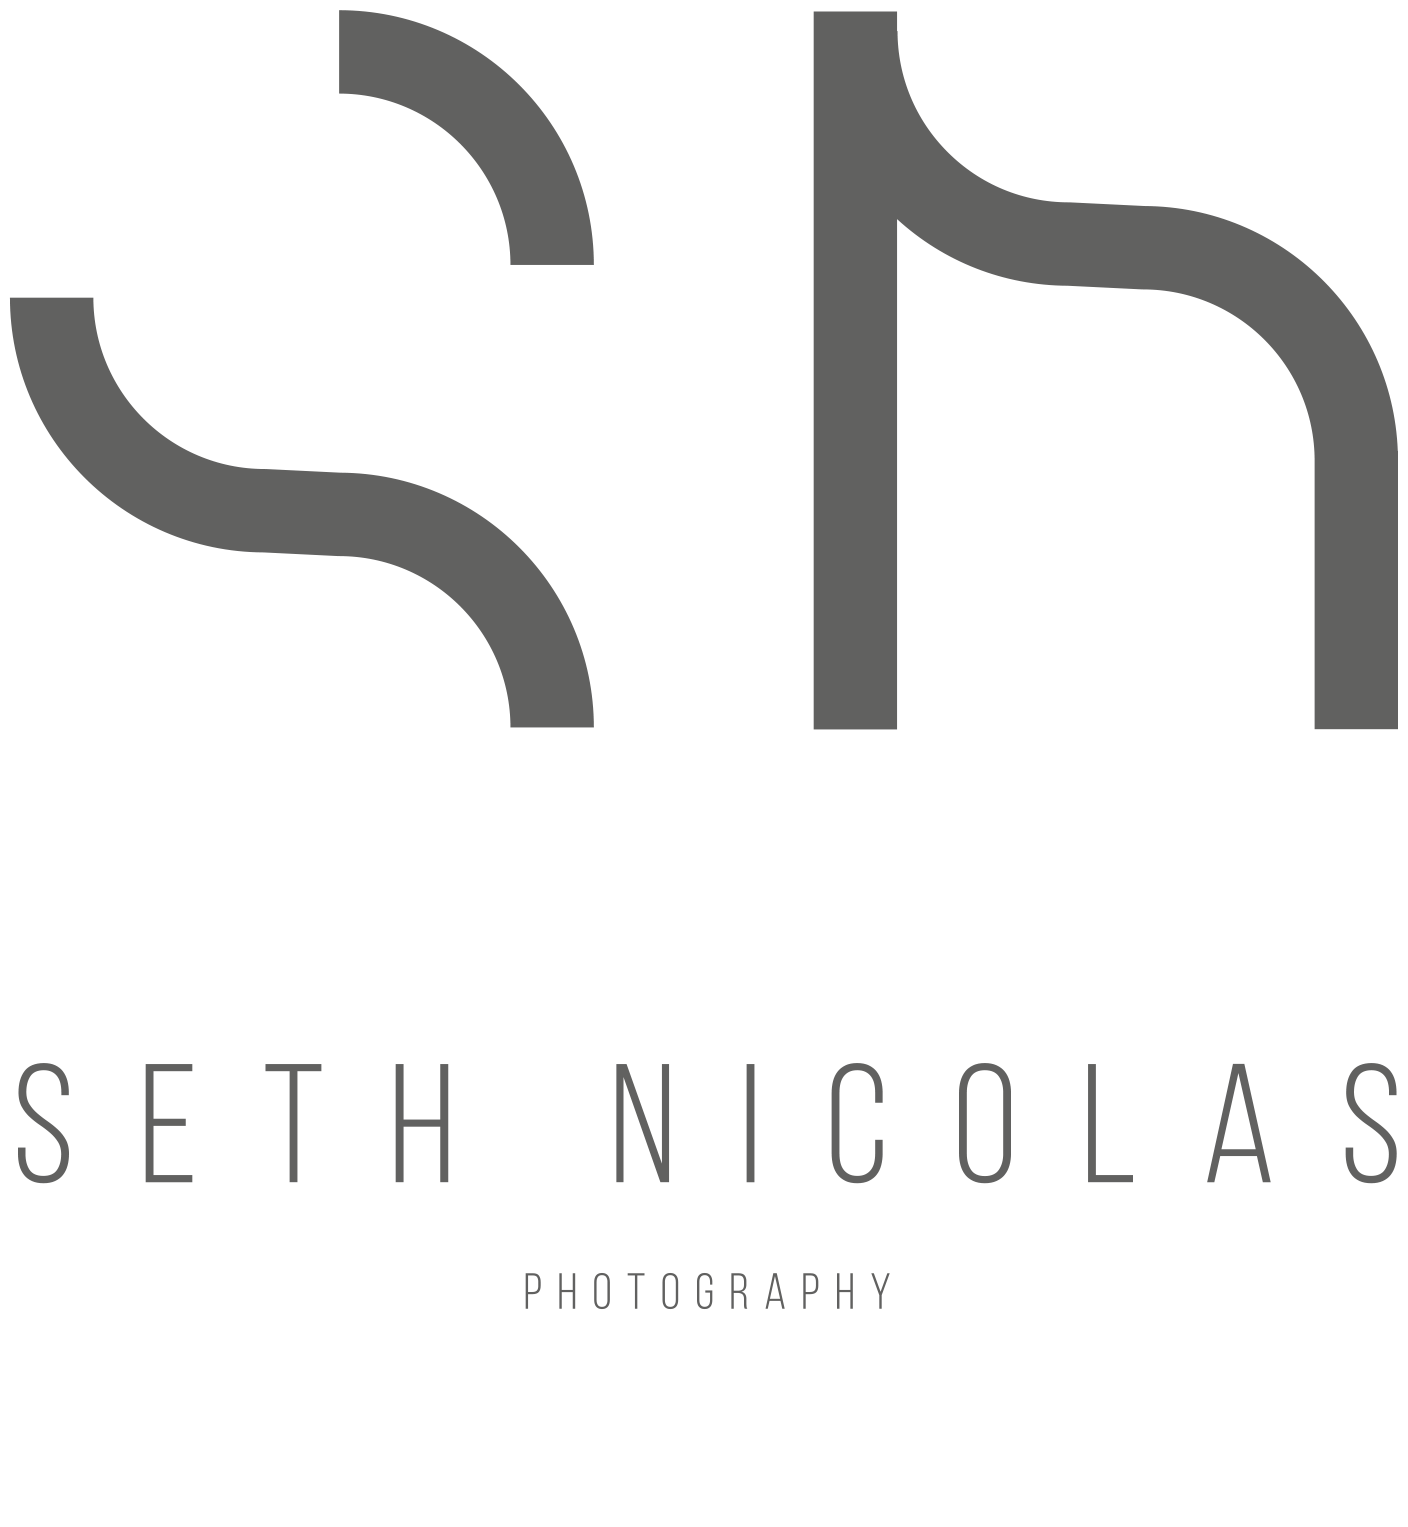 Seth Nicolas Photography